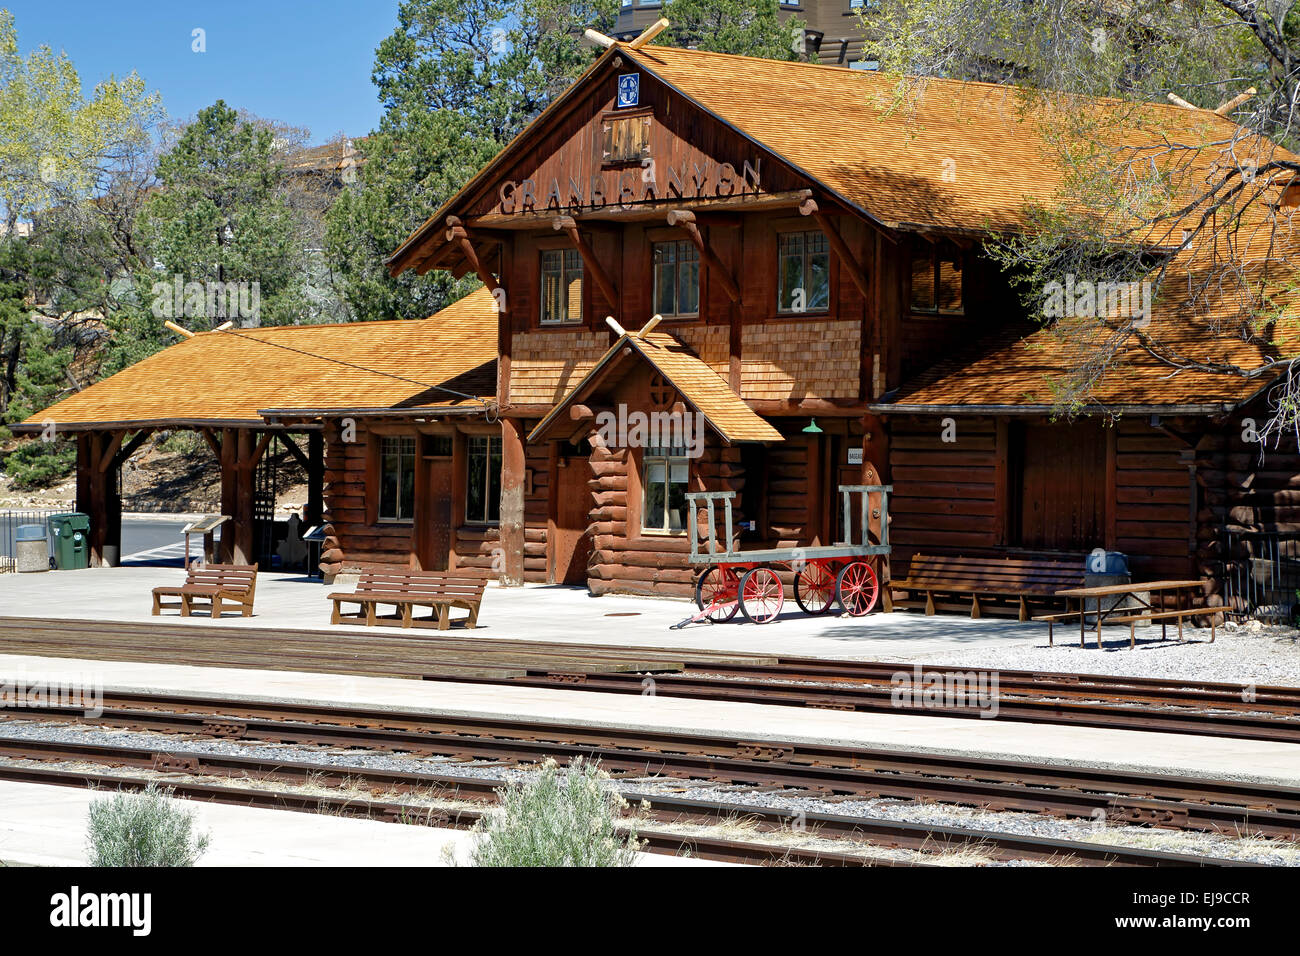 Historische Grand Canyon Railway Depot, Grand Canyon National Park, Arizona USA Stockfoto